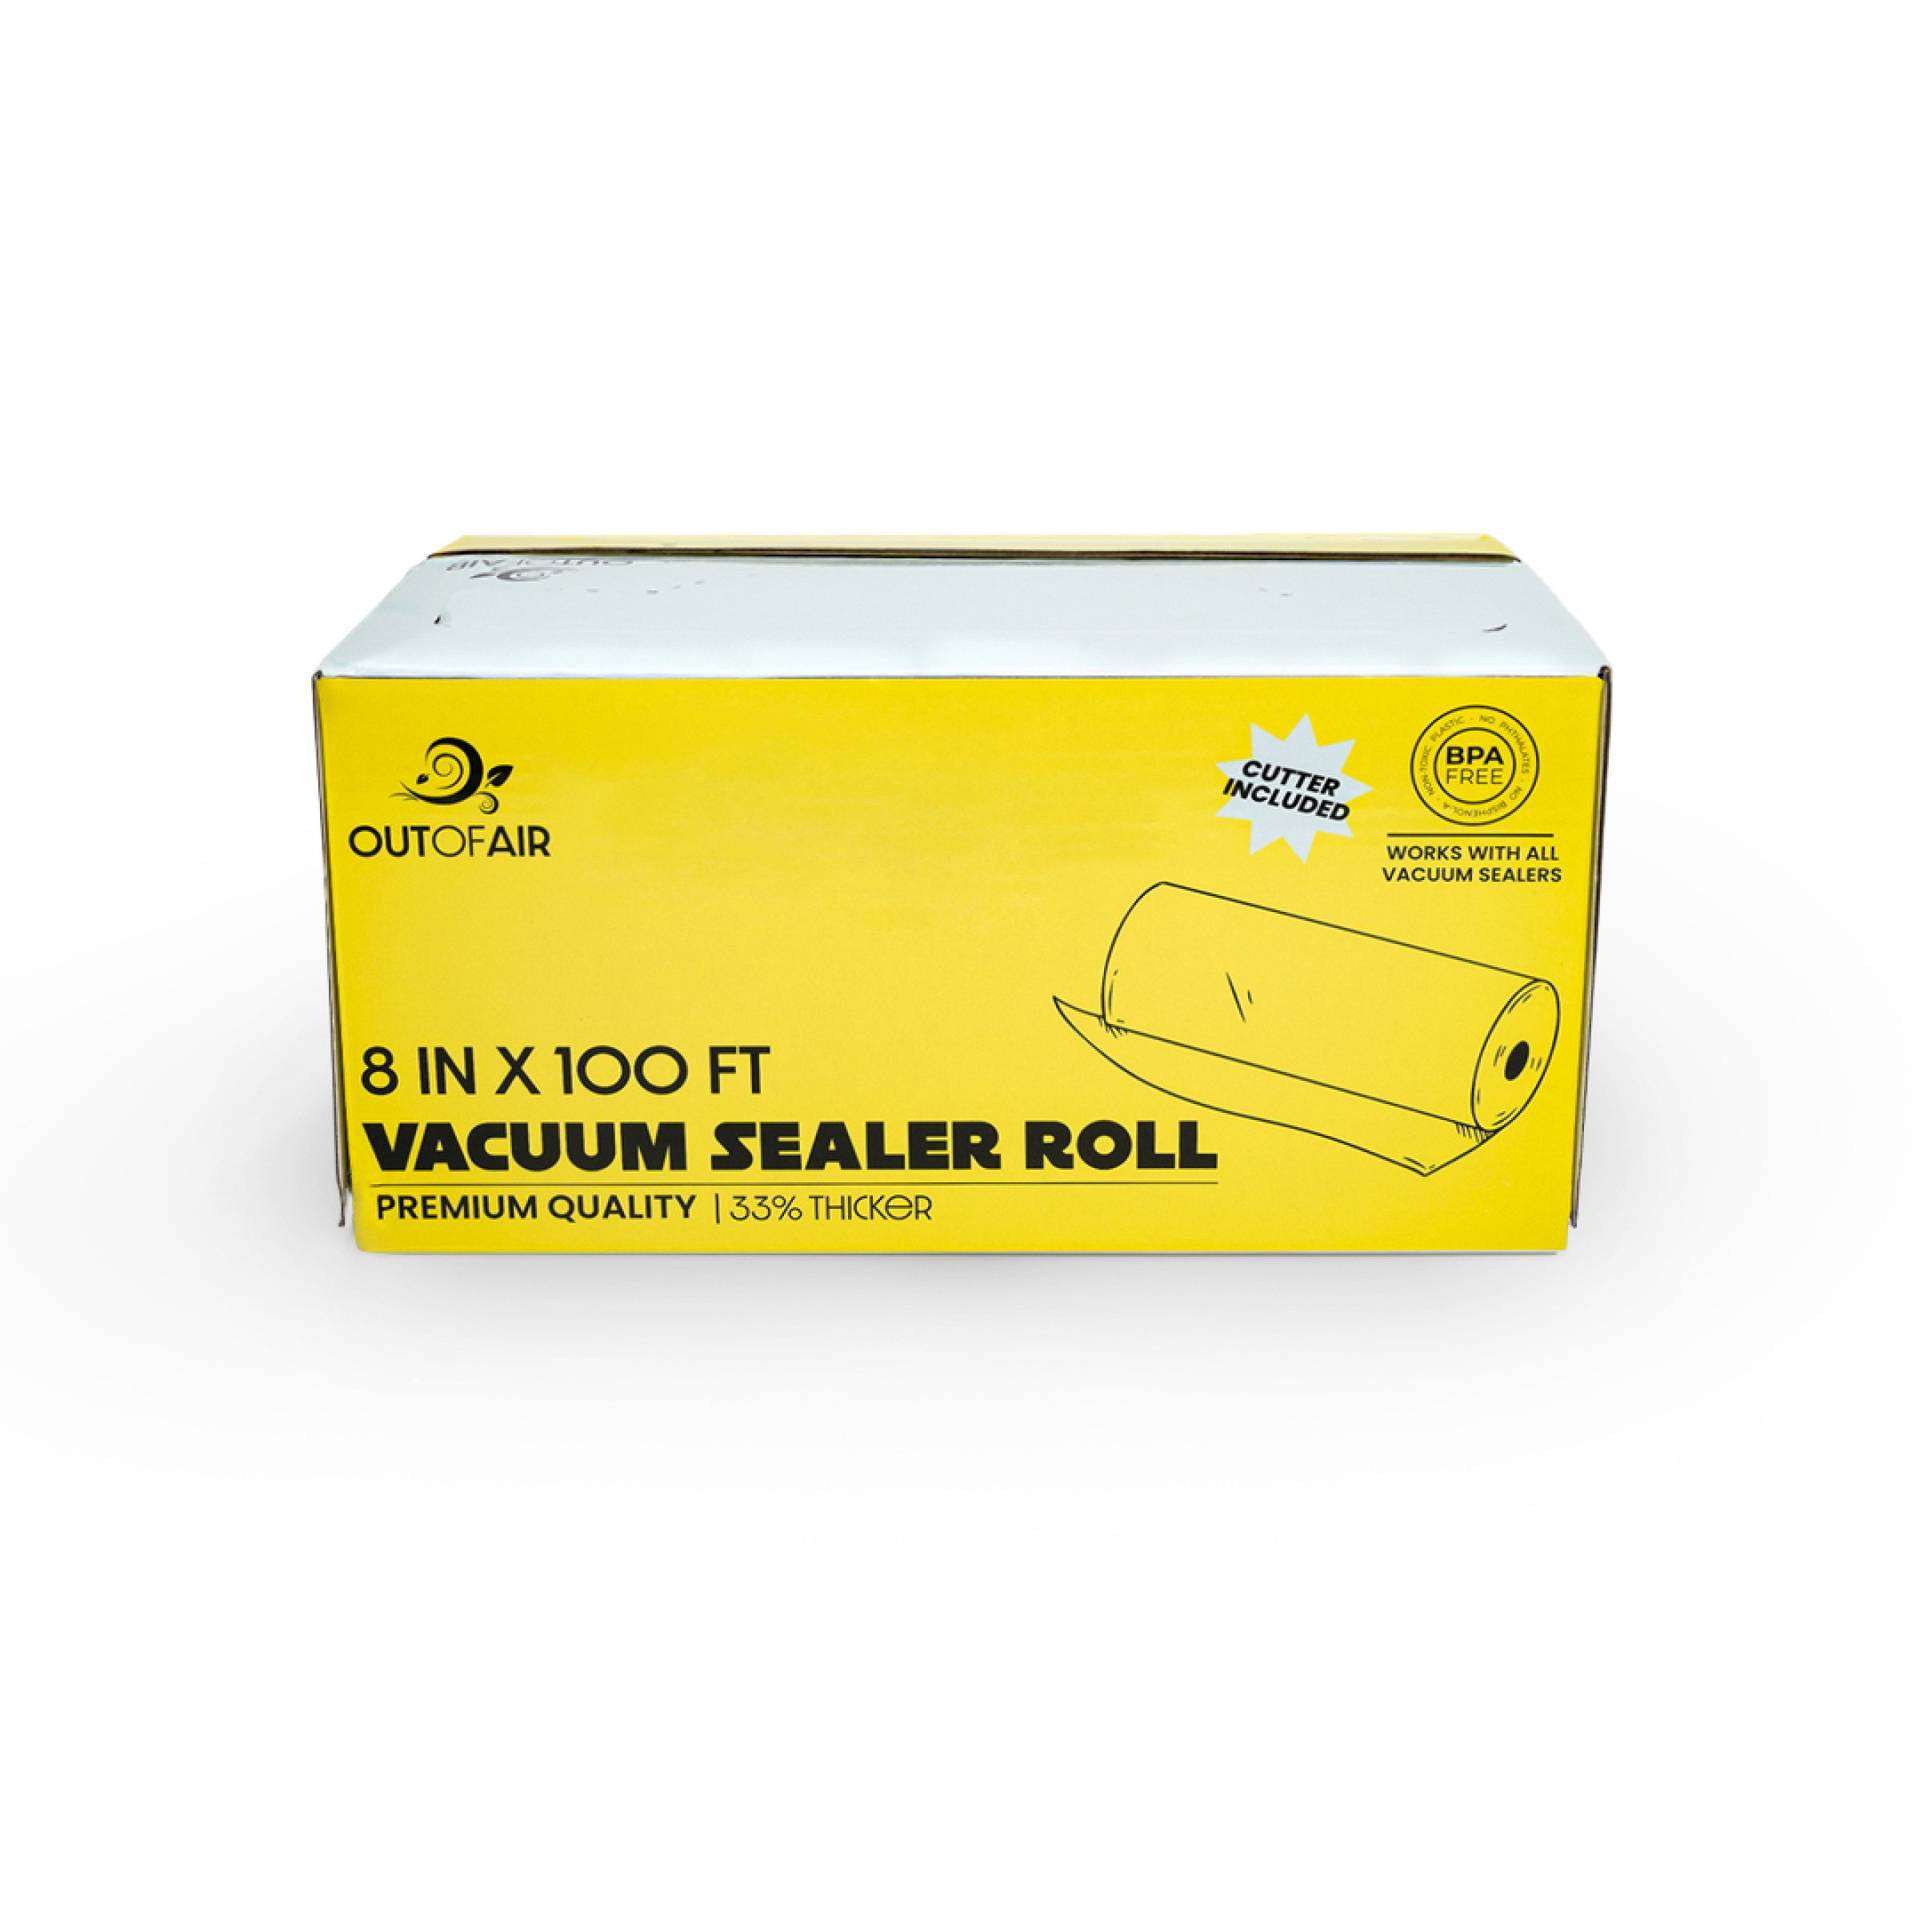 Cabela's Roll Cutter Box Vacuum Bags